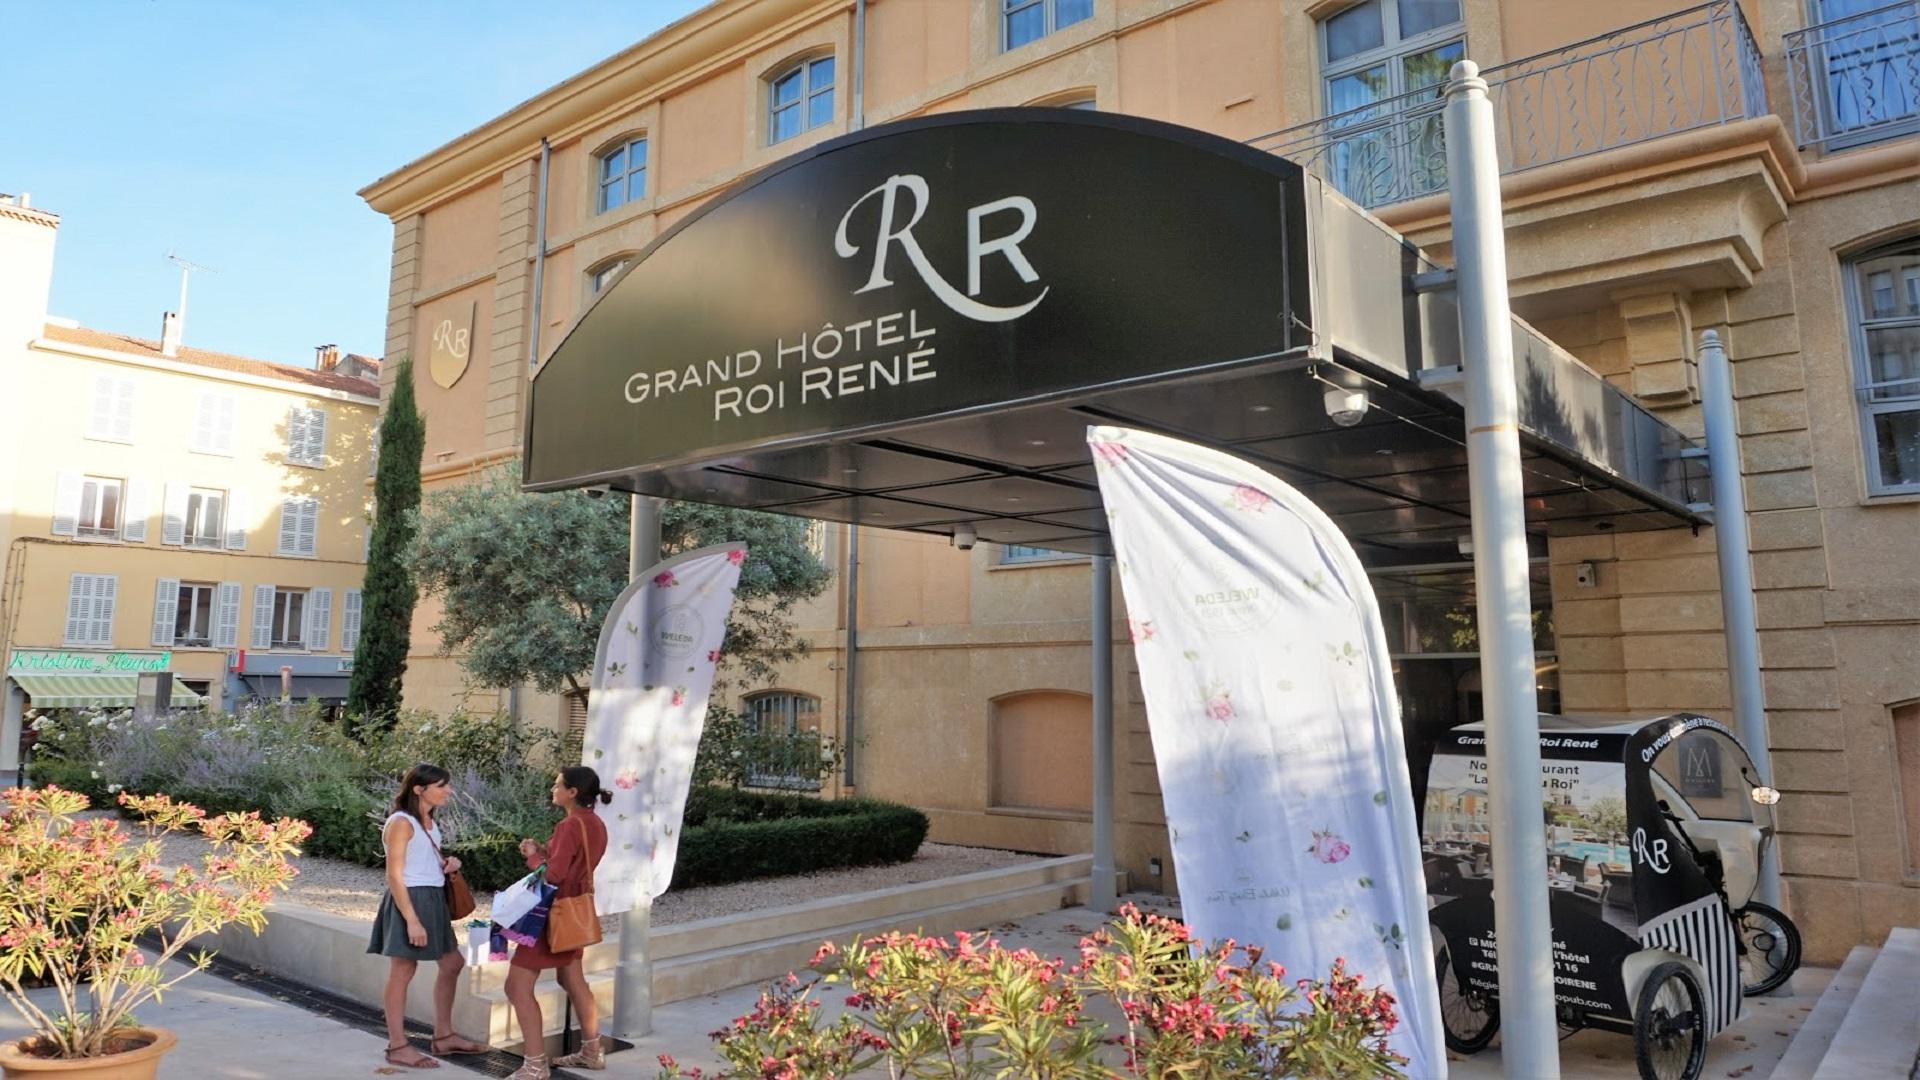 grand-hotel-roi-rene-aix-en-provence-paca-luberon-entree-seminaires-de-caractere.jpg